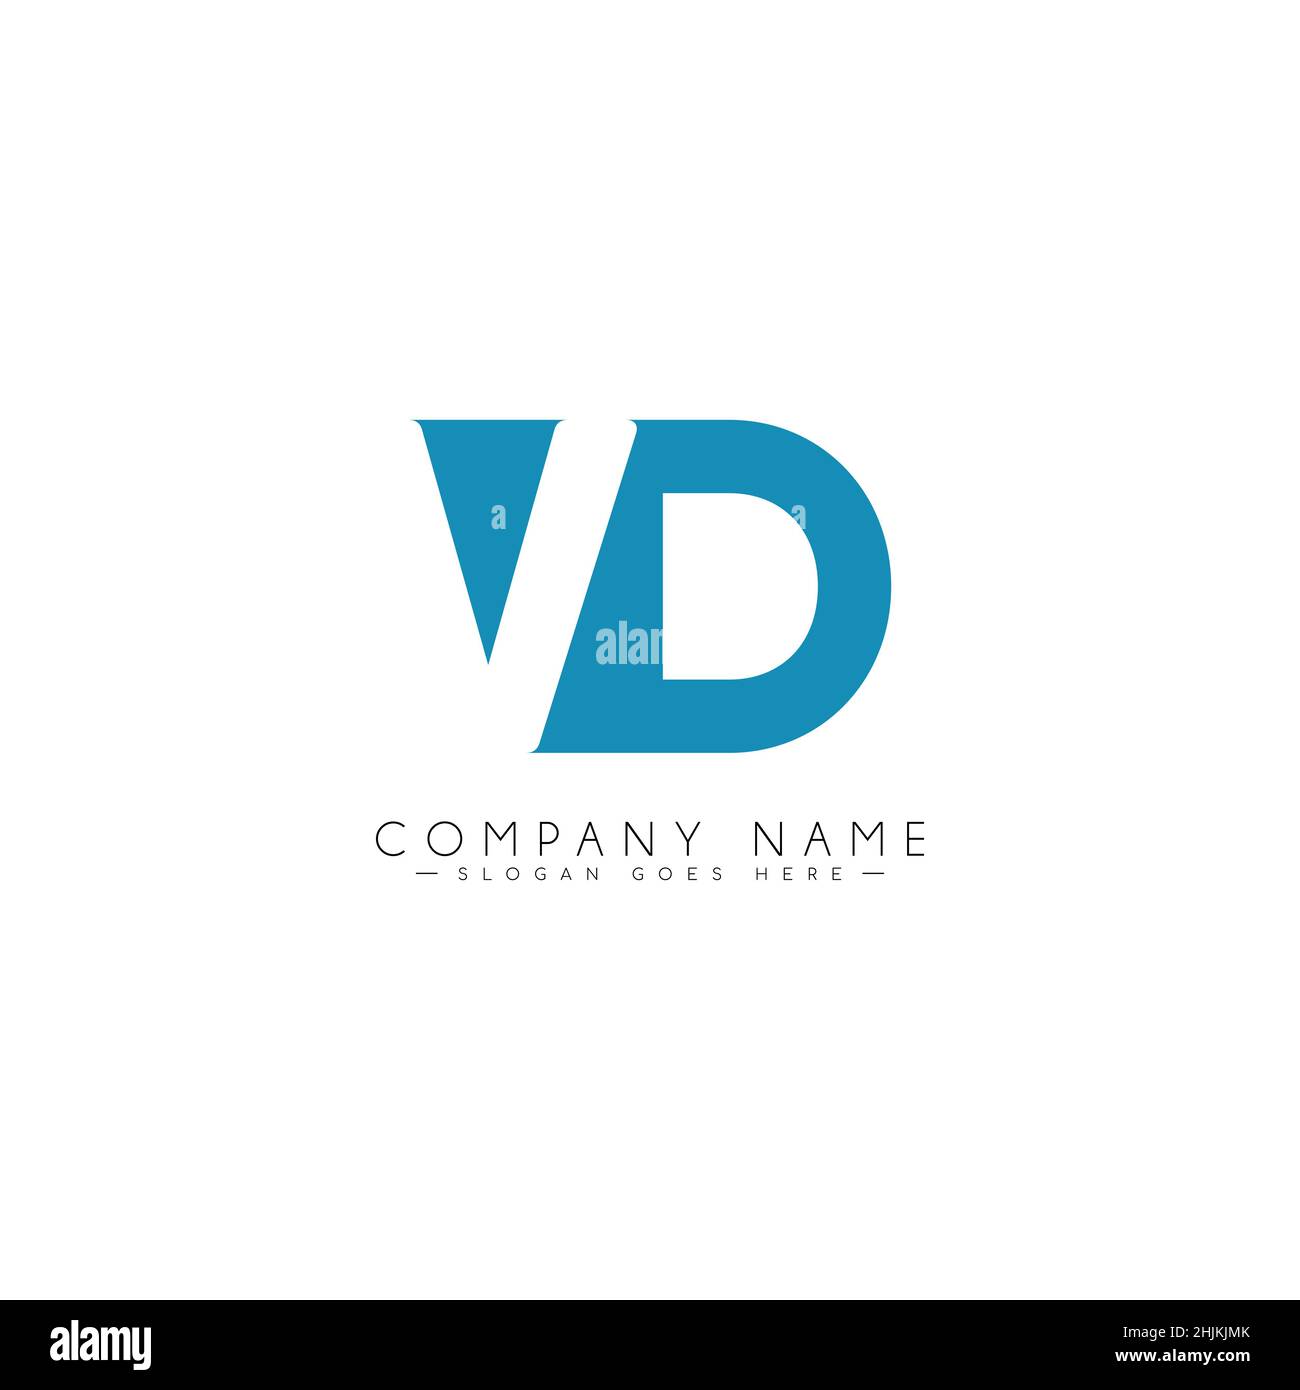 Minimal Business logo for Alphabet VD - Initial Letter V and D Logo - Monogram Vector Logo Template for Business Name Initials Stock Vector